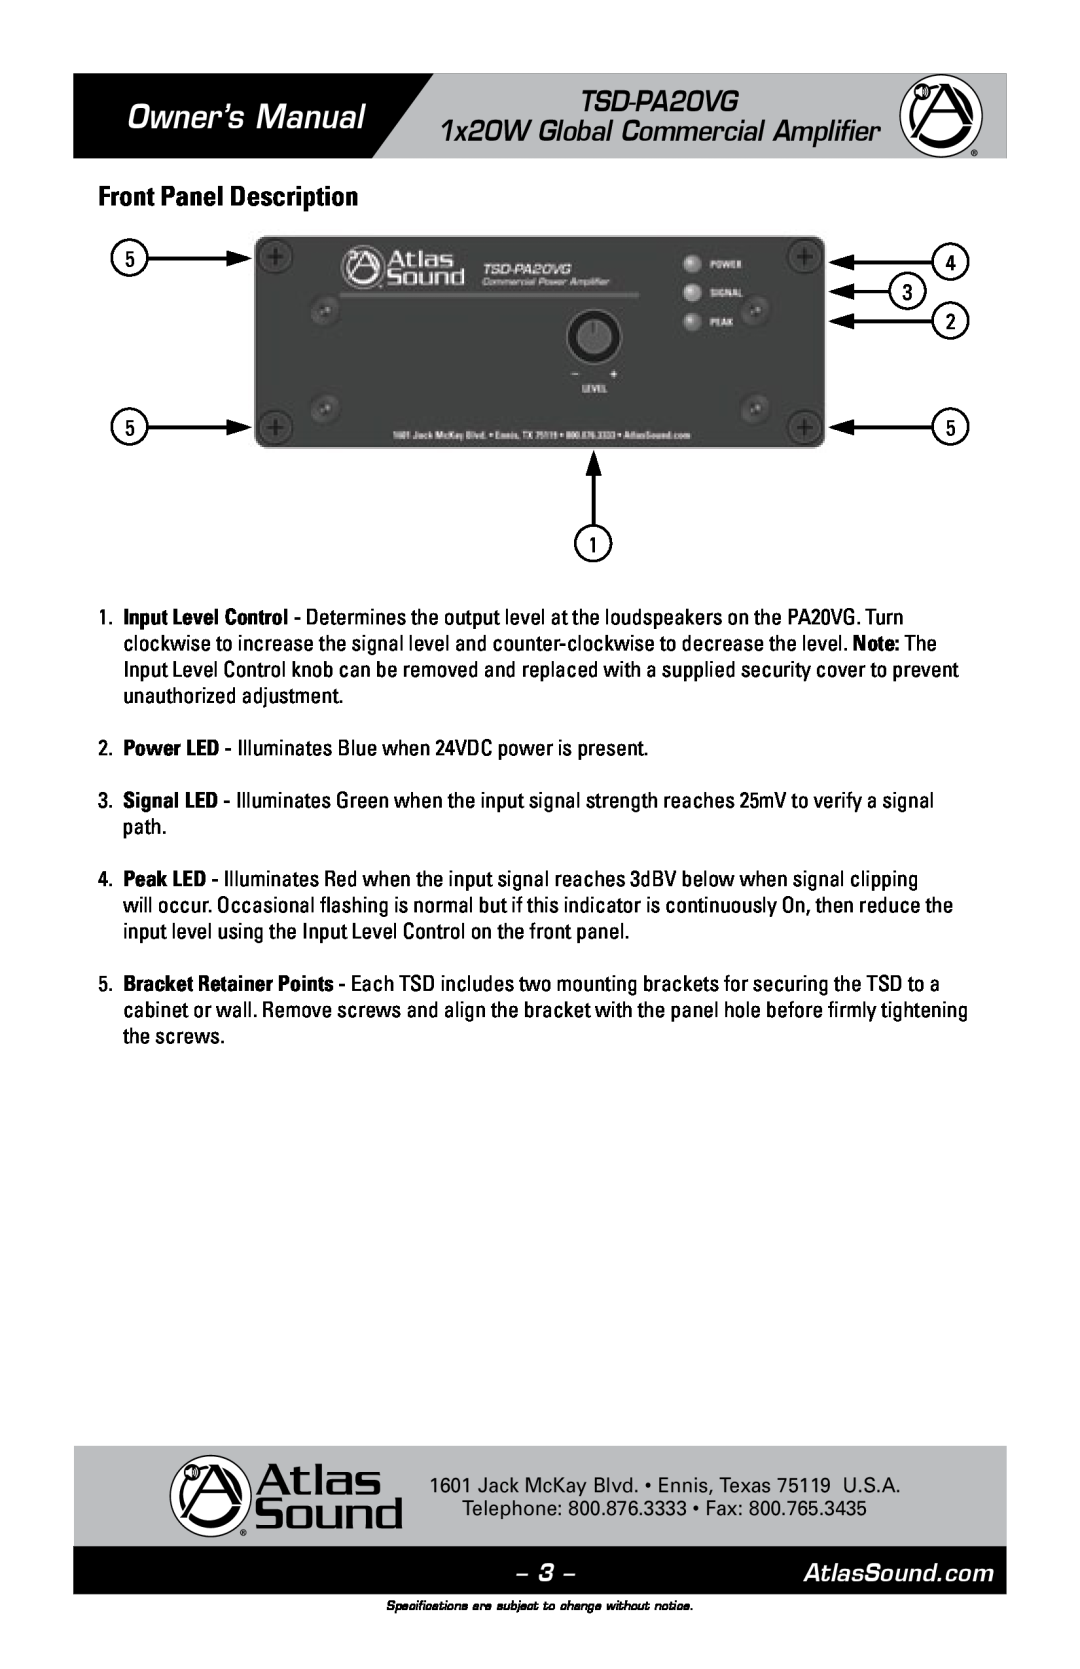 Atlas Sound Front Panel Description, Owner’s Manual, TSD-PA20VG 1x20W Global Commercial Amplifier, AtlasSound.com 